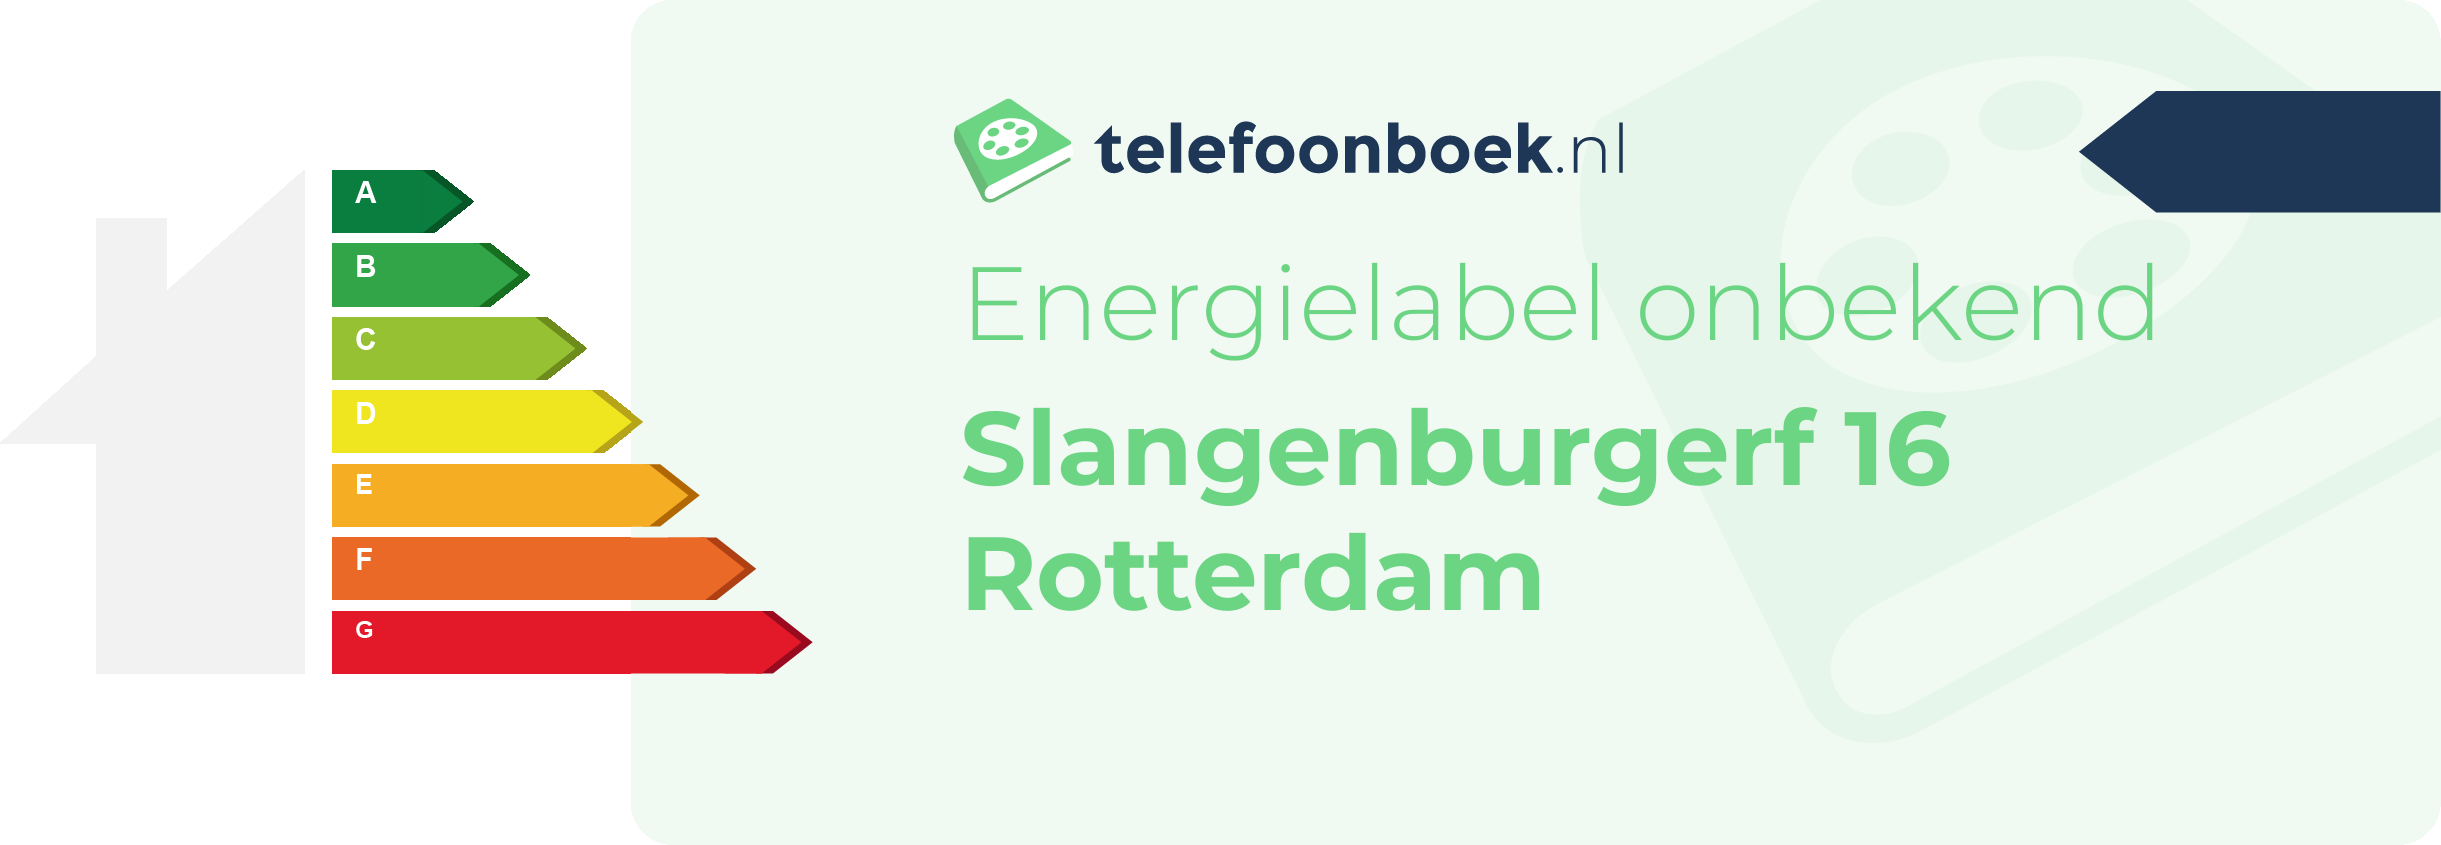 Energielabel Slangenburgerf 16 Rotterdam